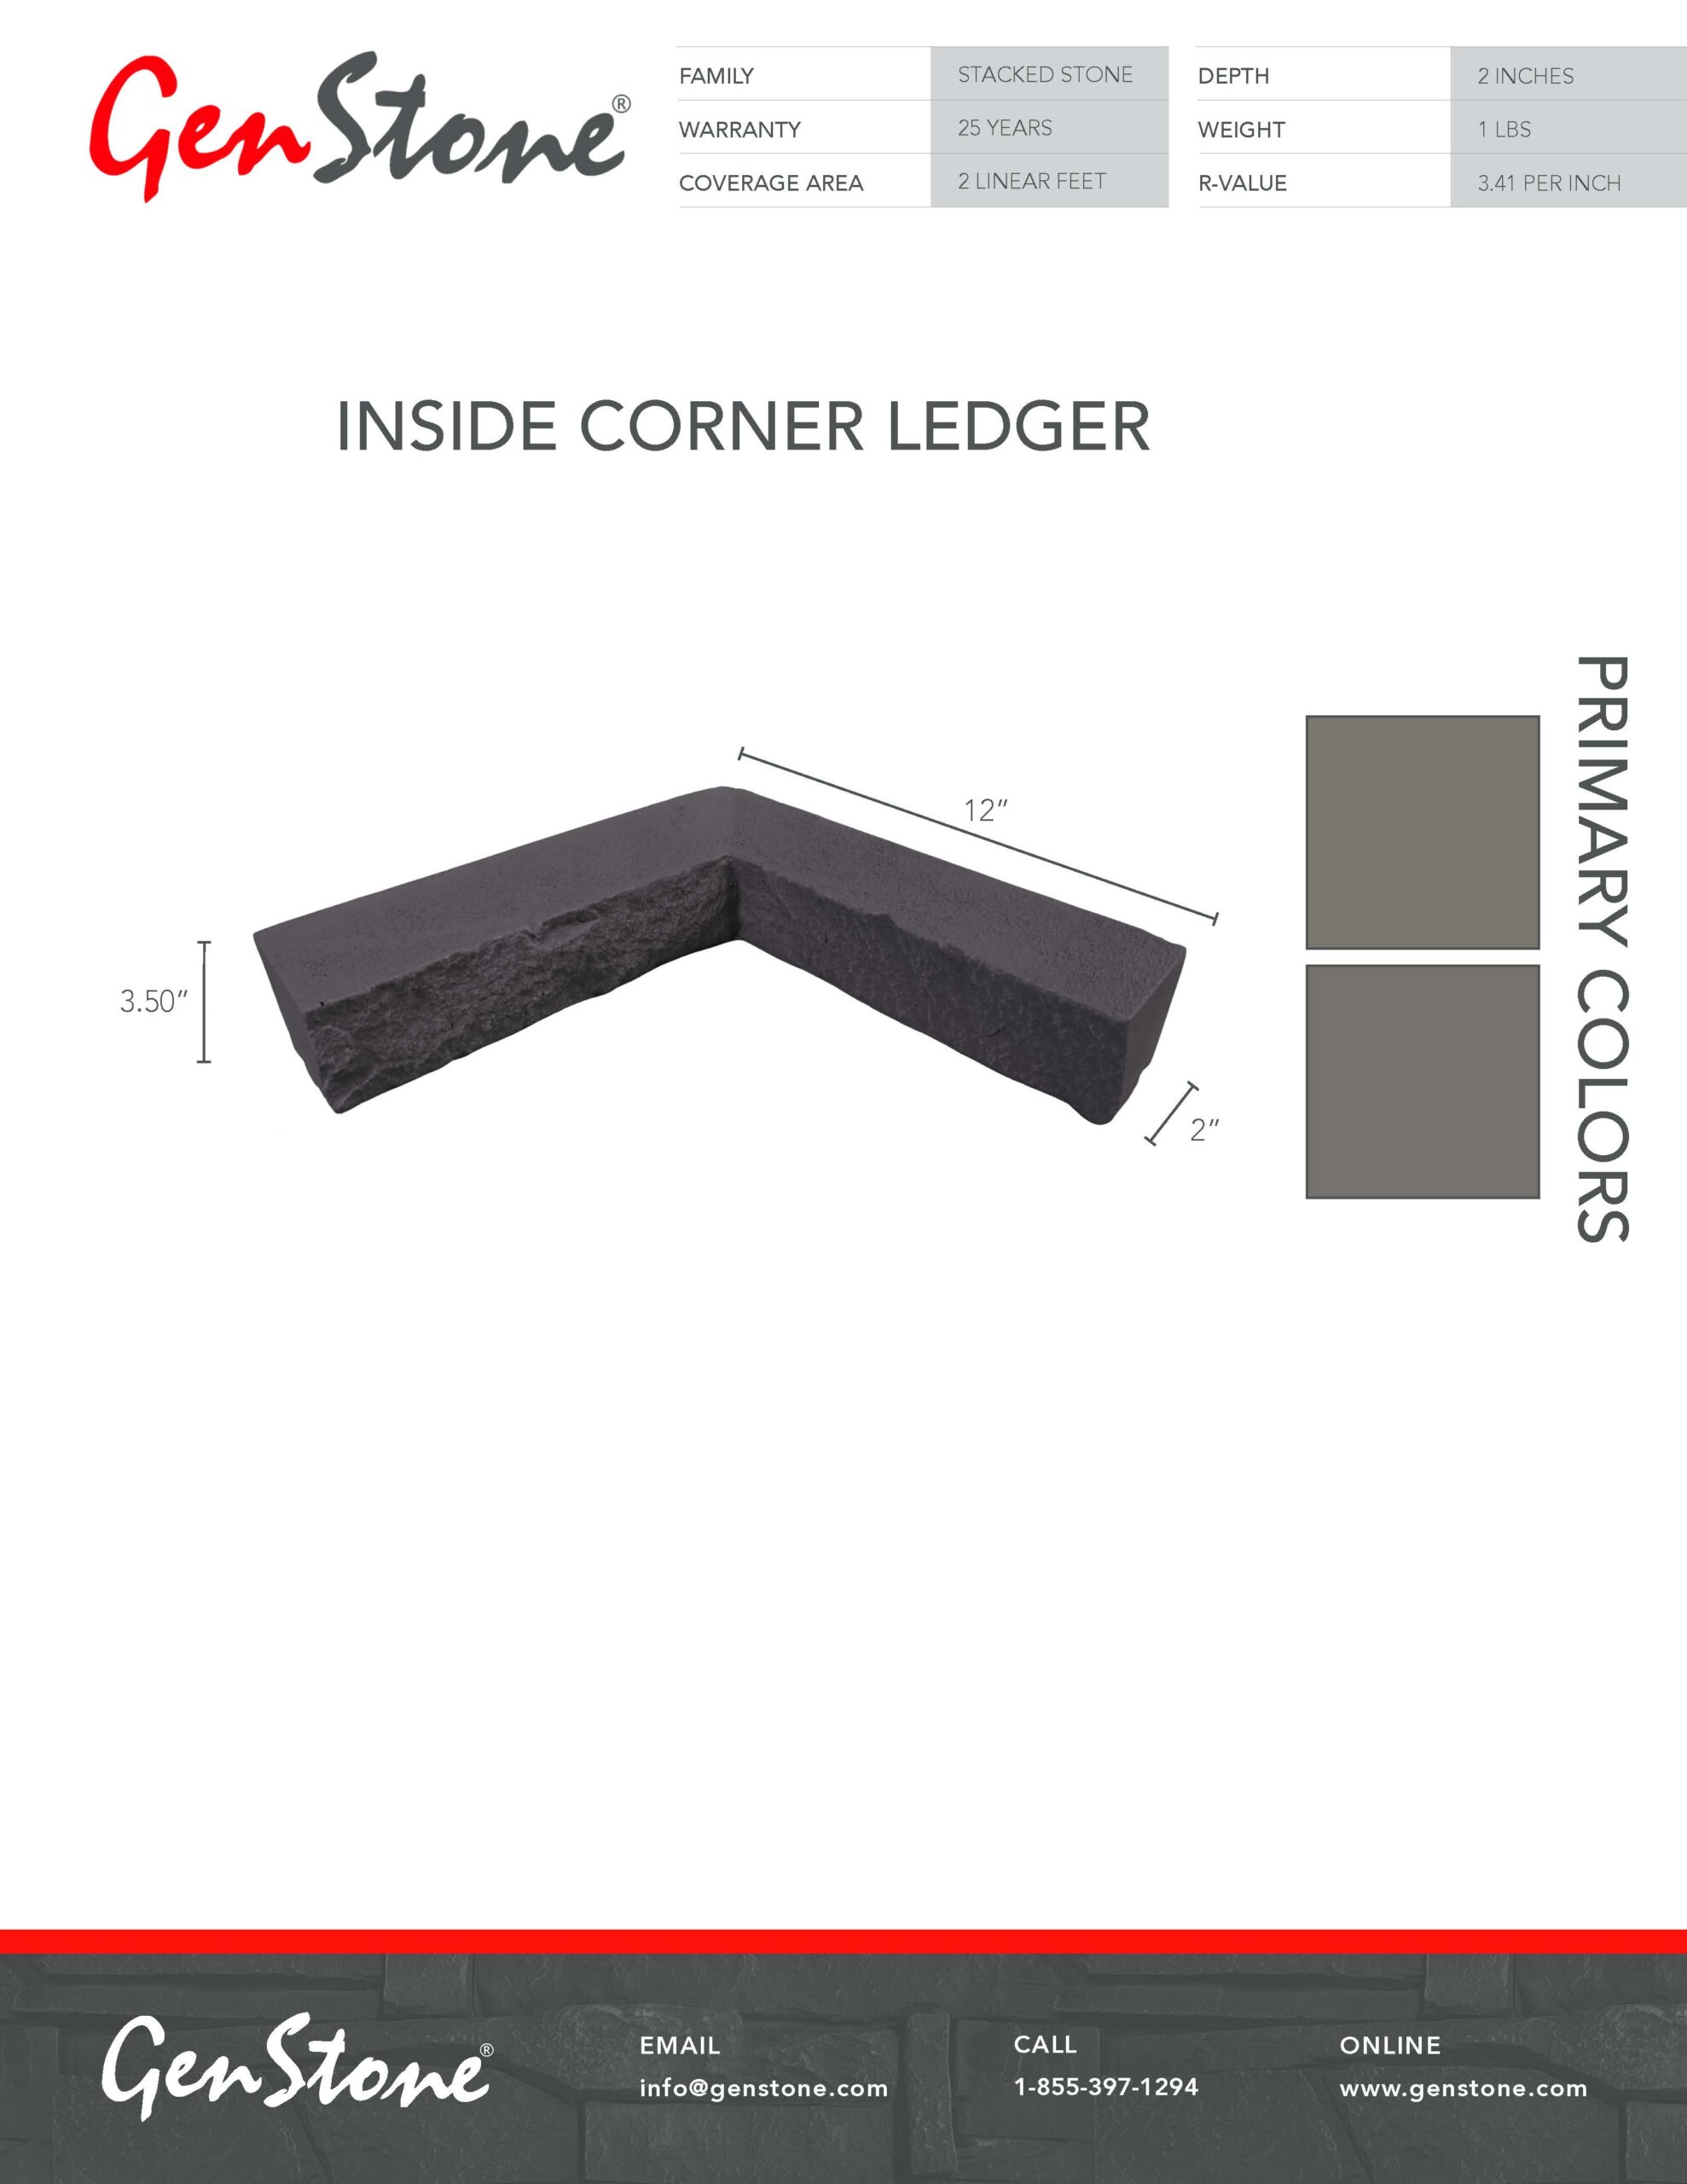 2022 Keystone Stacked Stone System - Inside Corner Ledger